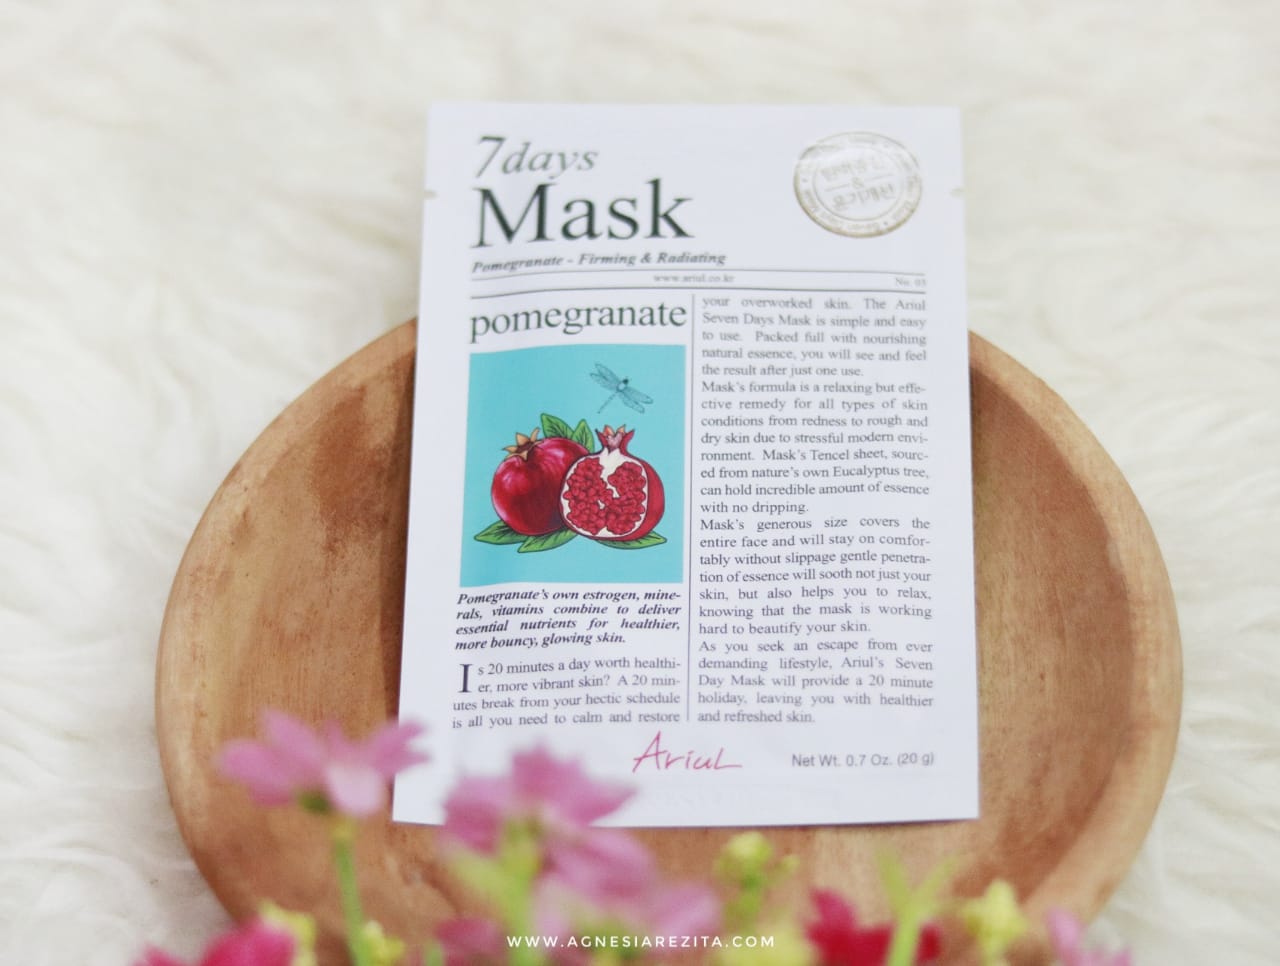 Ekel маска Pomegranate. Маски для лица 7 Days. Задоэр Плант Маск Помегранат. Маска даты и времени. 7 дейс маски